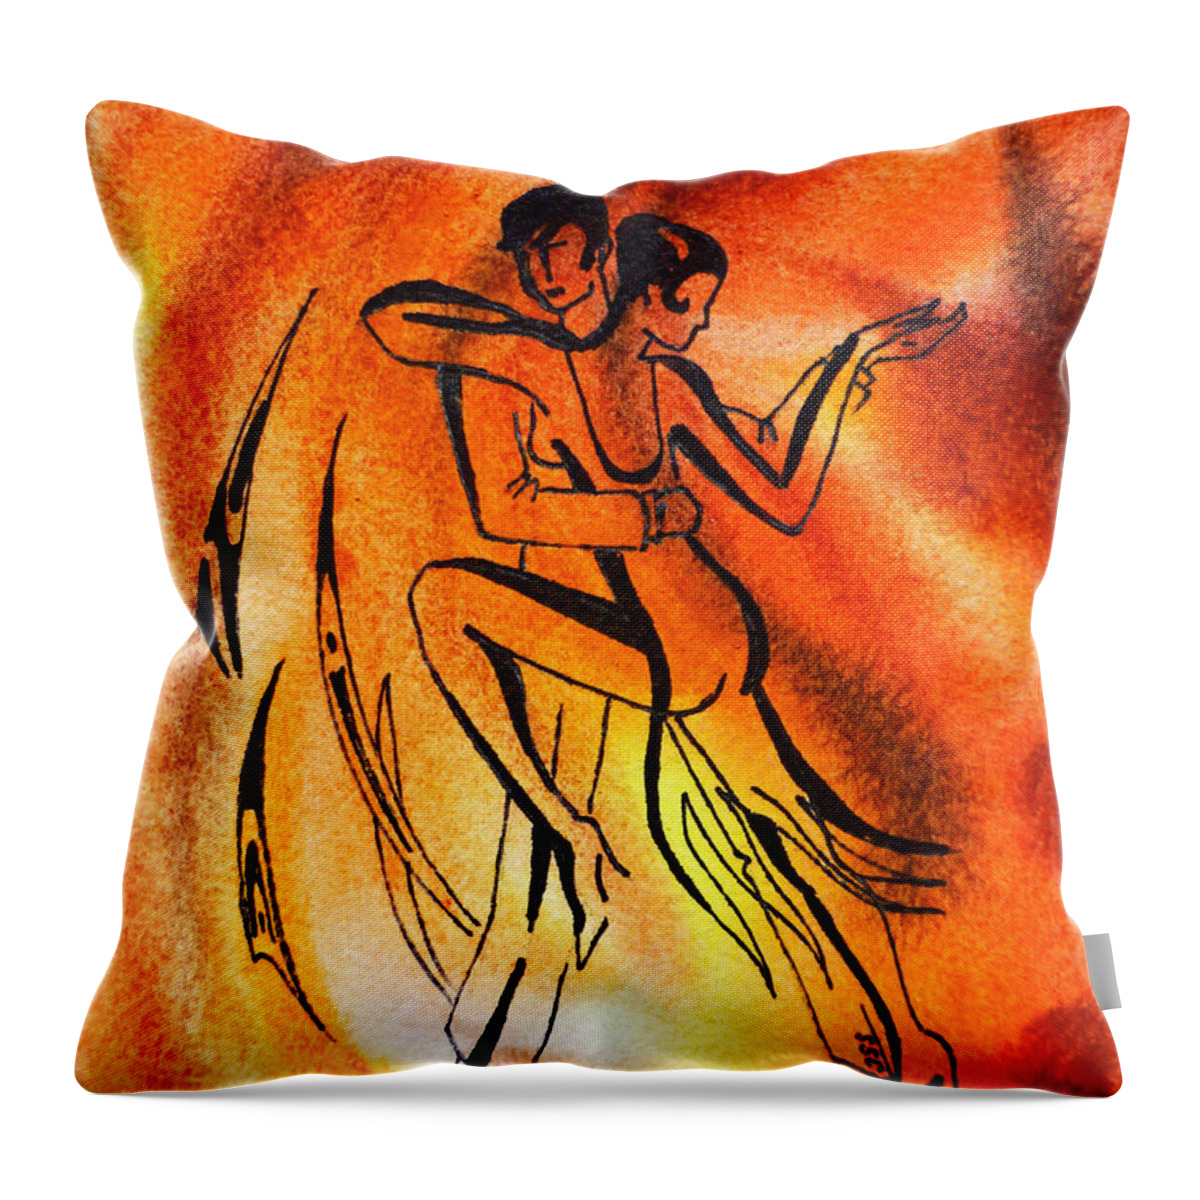 Abstract Design Throw Pillow featuring the painting Dancing Fire IV by Irina Sztukowski